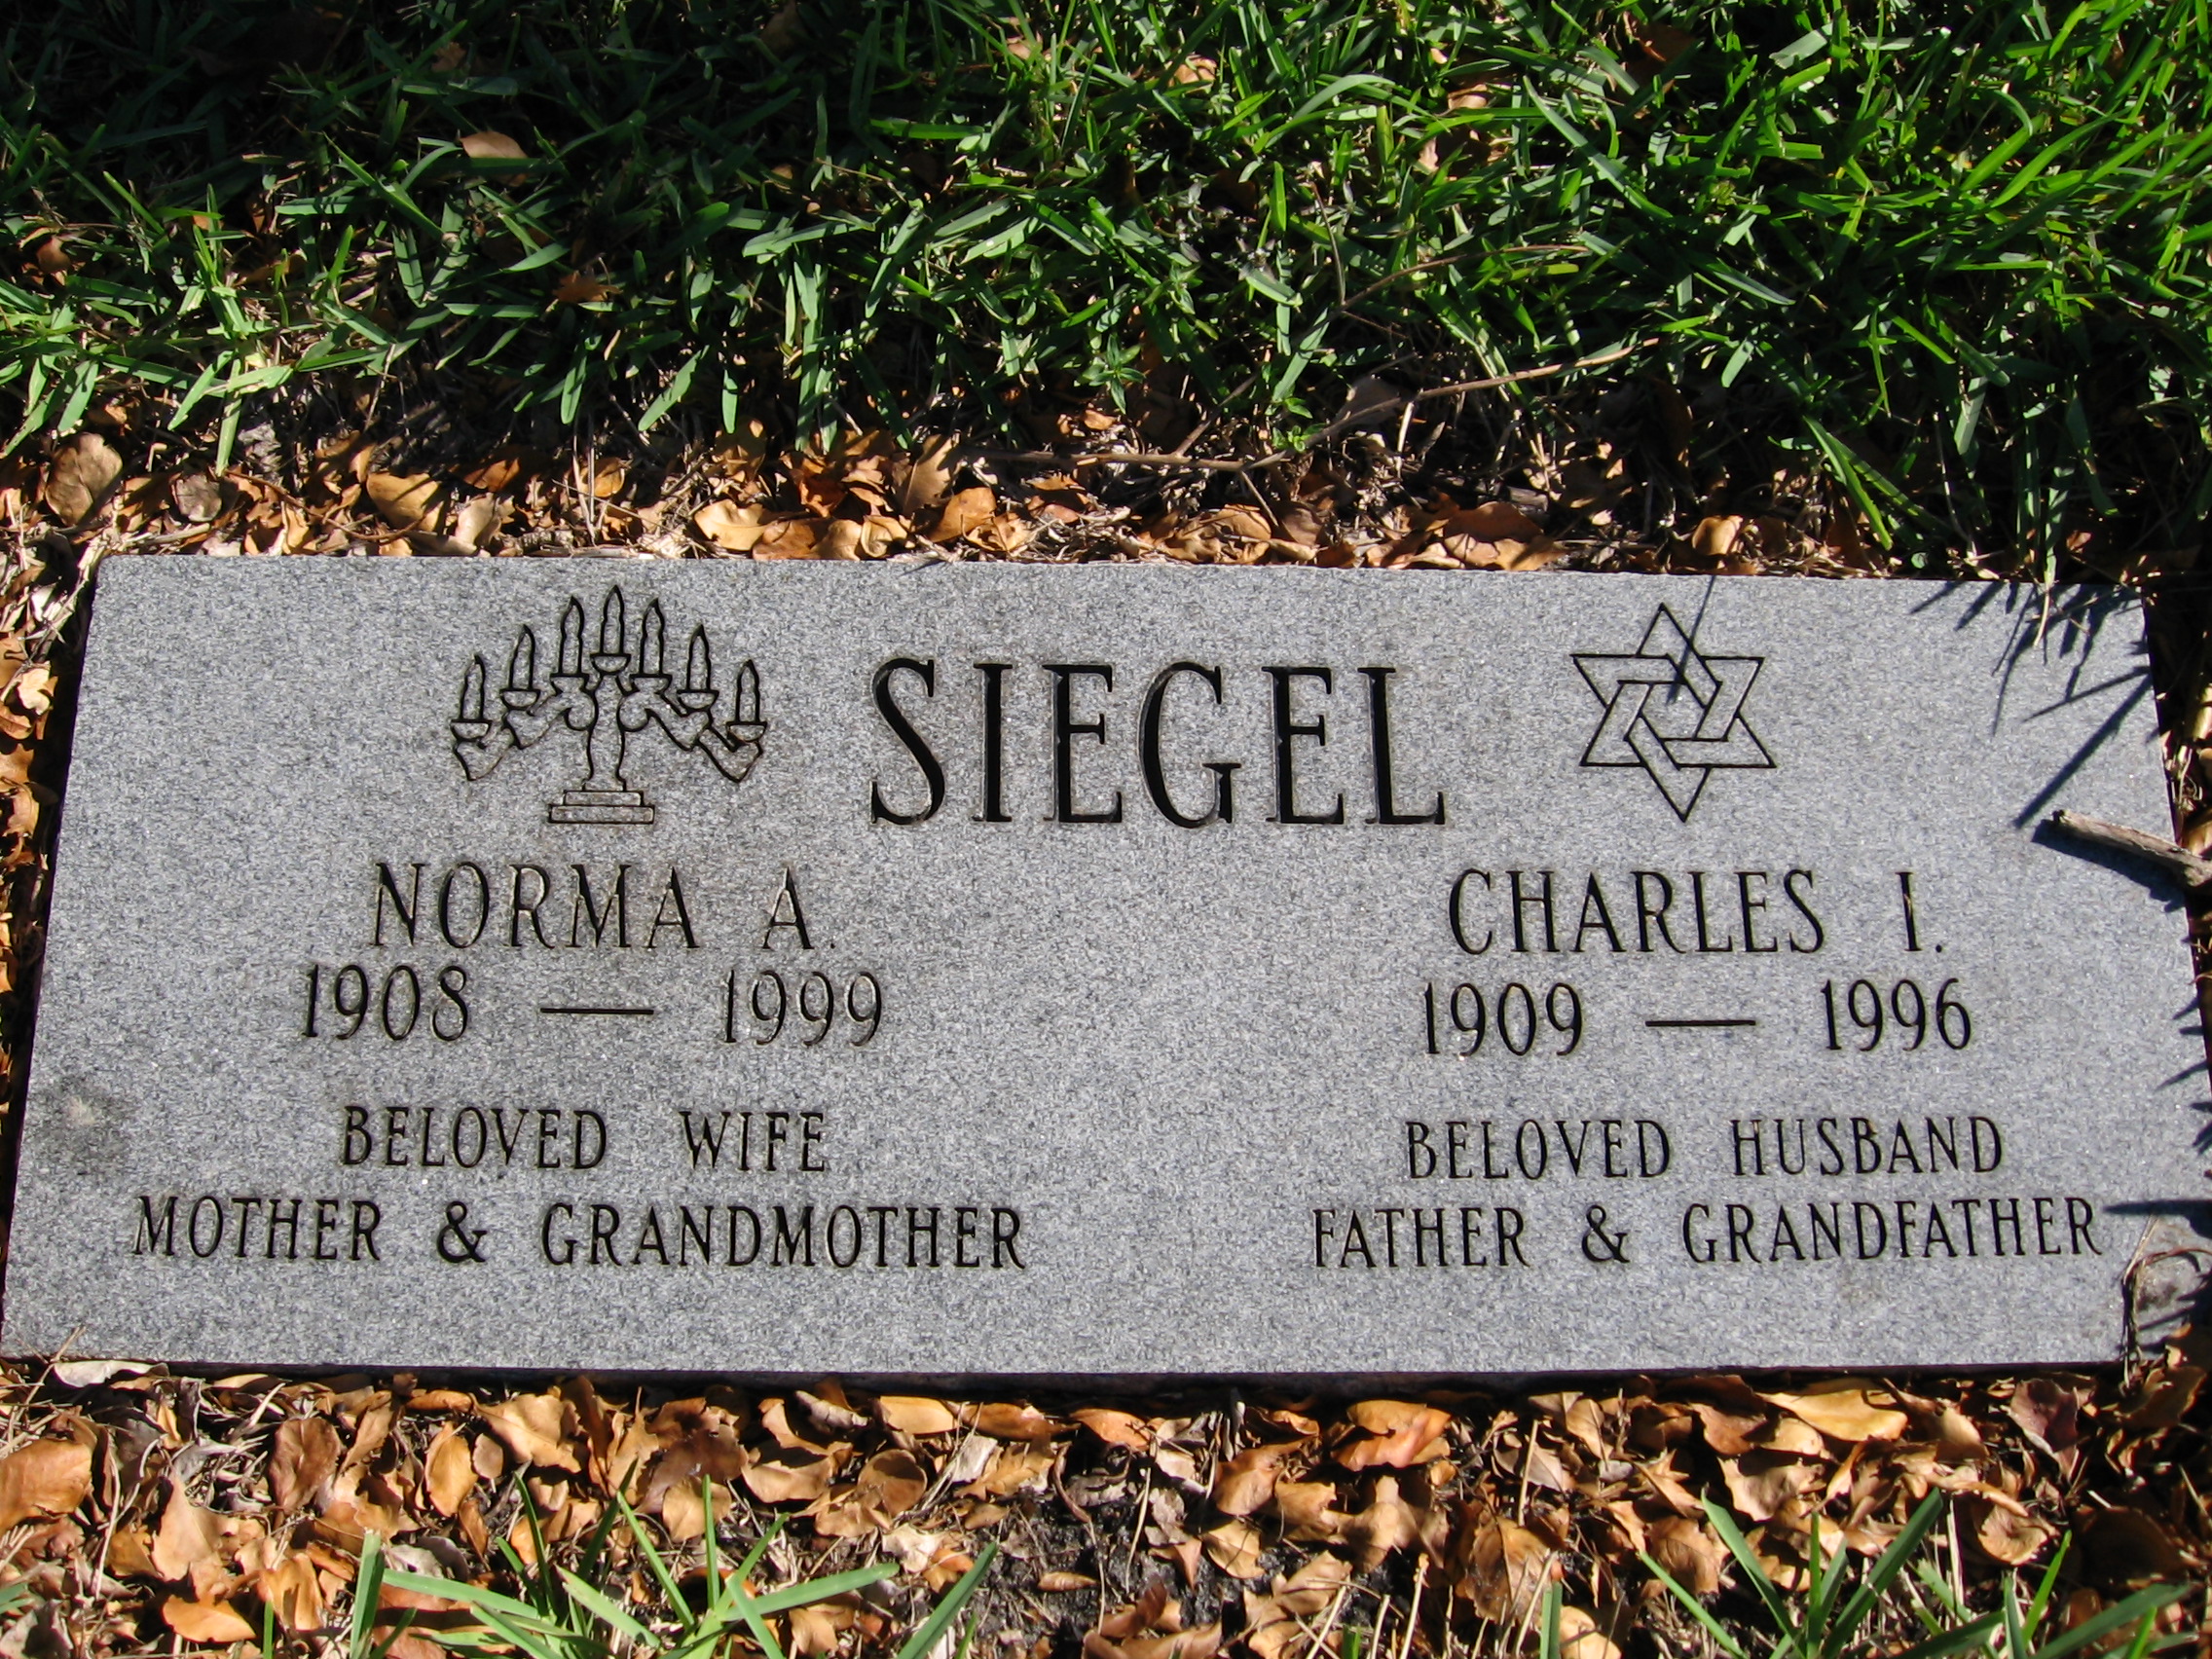 Charles I Siegel